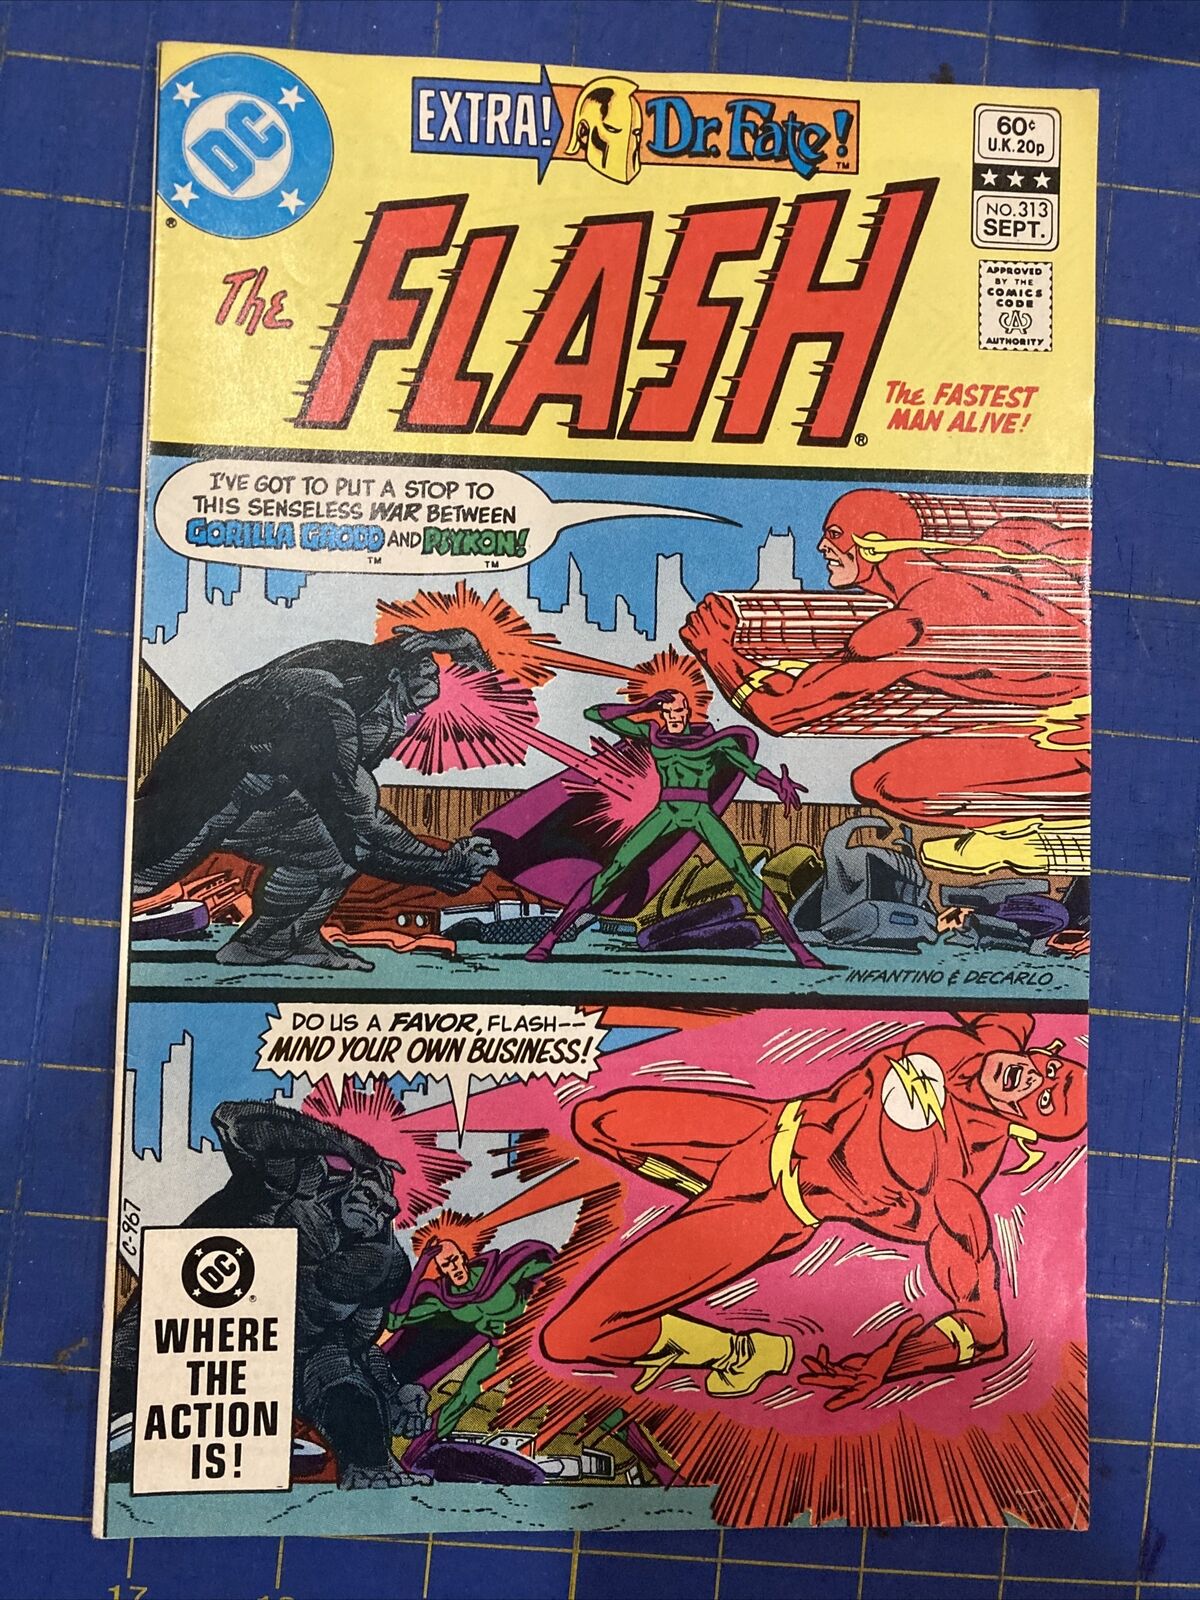 The Flash #313 DC Comics Very Fine VF Condition September 1982 Nice Copy C1